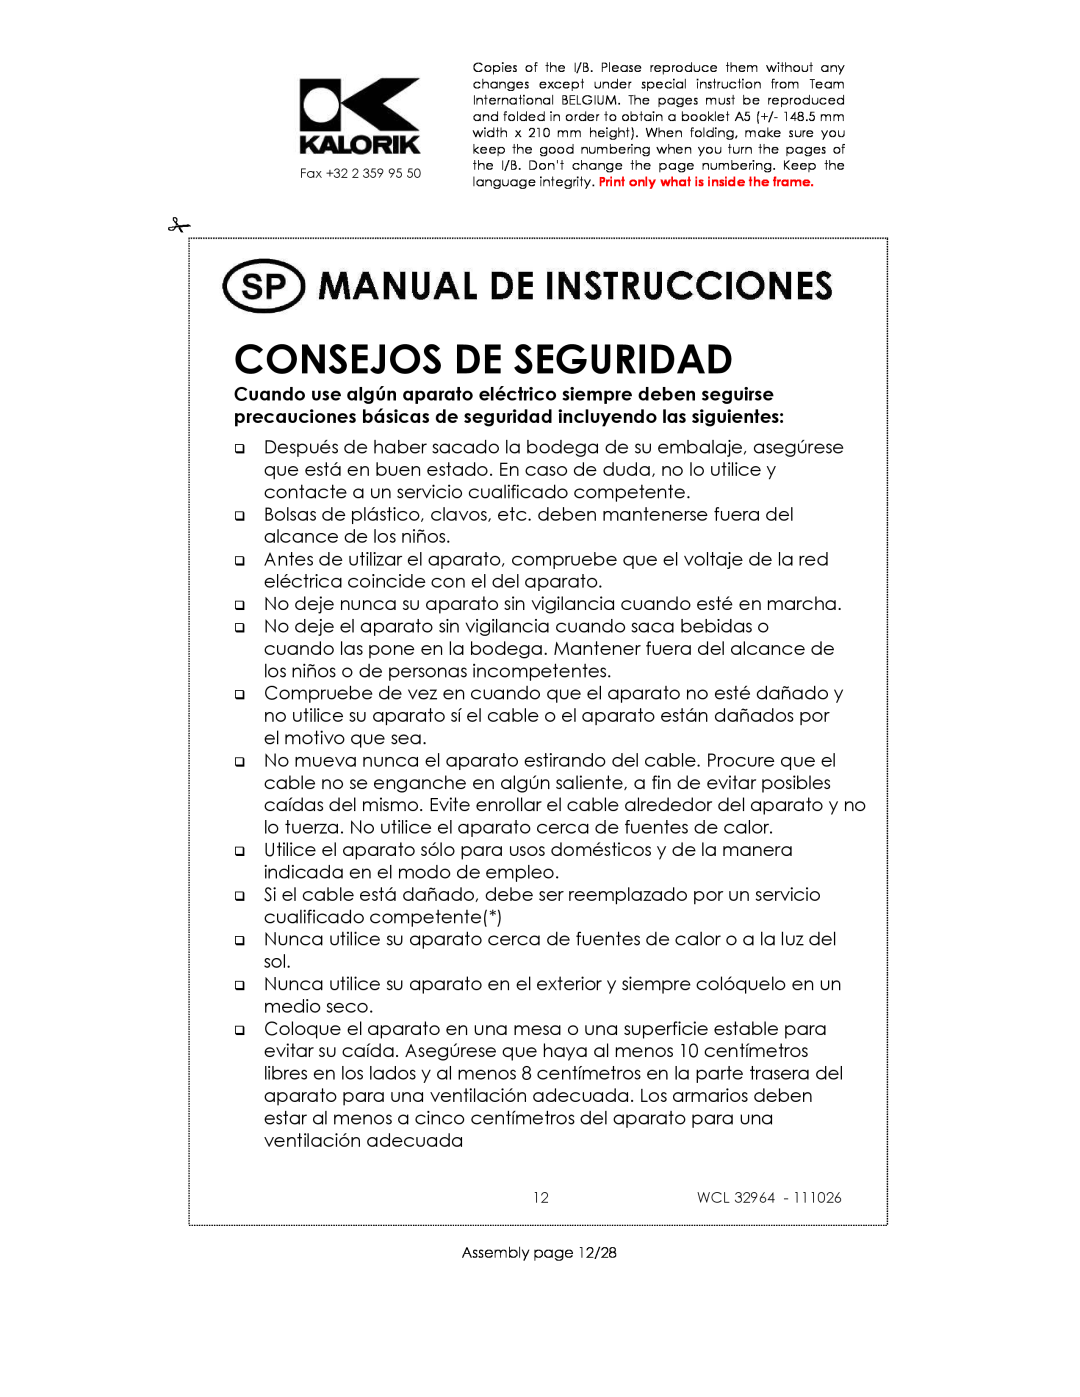 Kalorik USK WCL 32964 115V~130W manual Consejos De Seguridad, 12WCL 32964 - Assembly page 12/28 